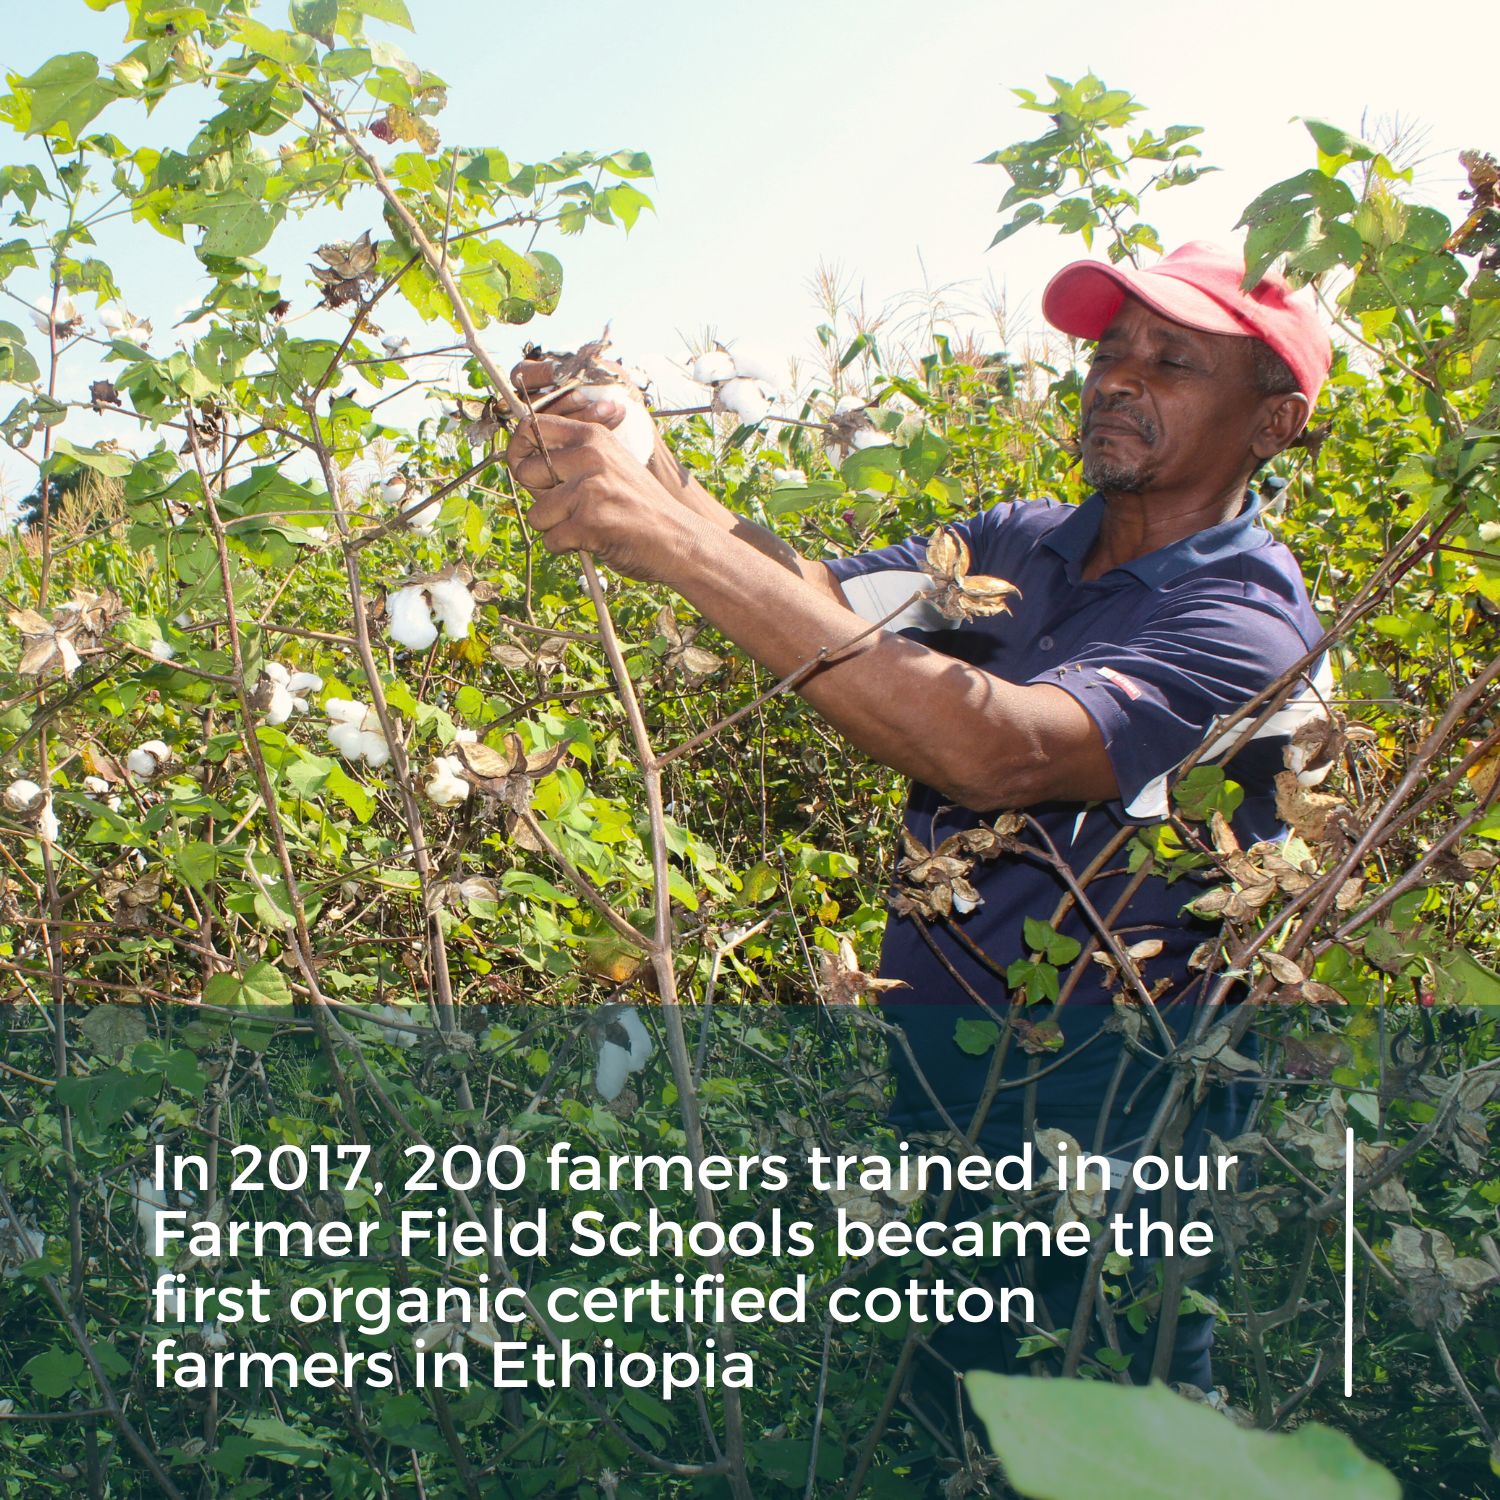 First organic cotton farmers in Ethiopia